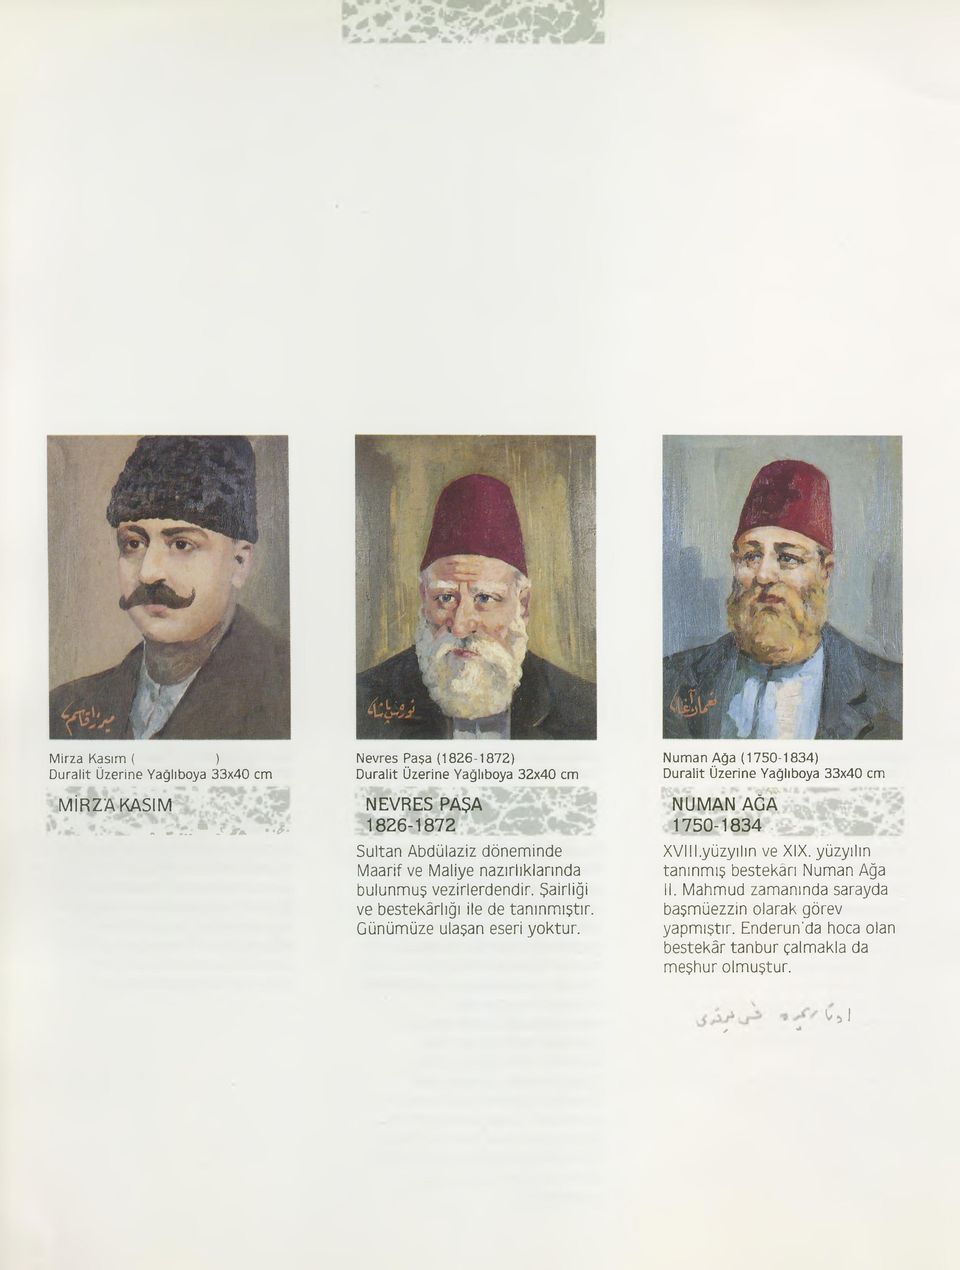 Numan Ağa (1750-1834).» i. s r». "fi- 'Si*- NUMAN AGA 1750-1834 XVIIl.yüzyılın ve XIX.